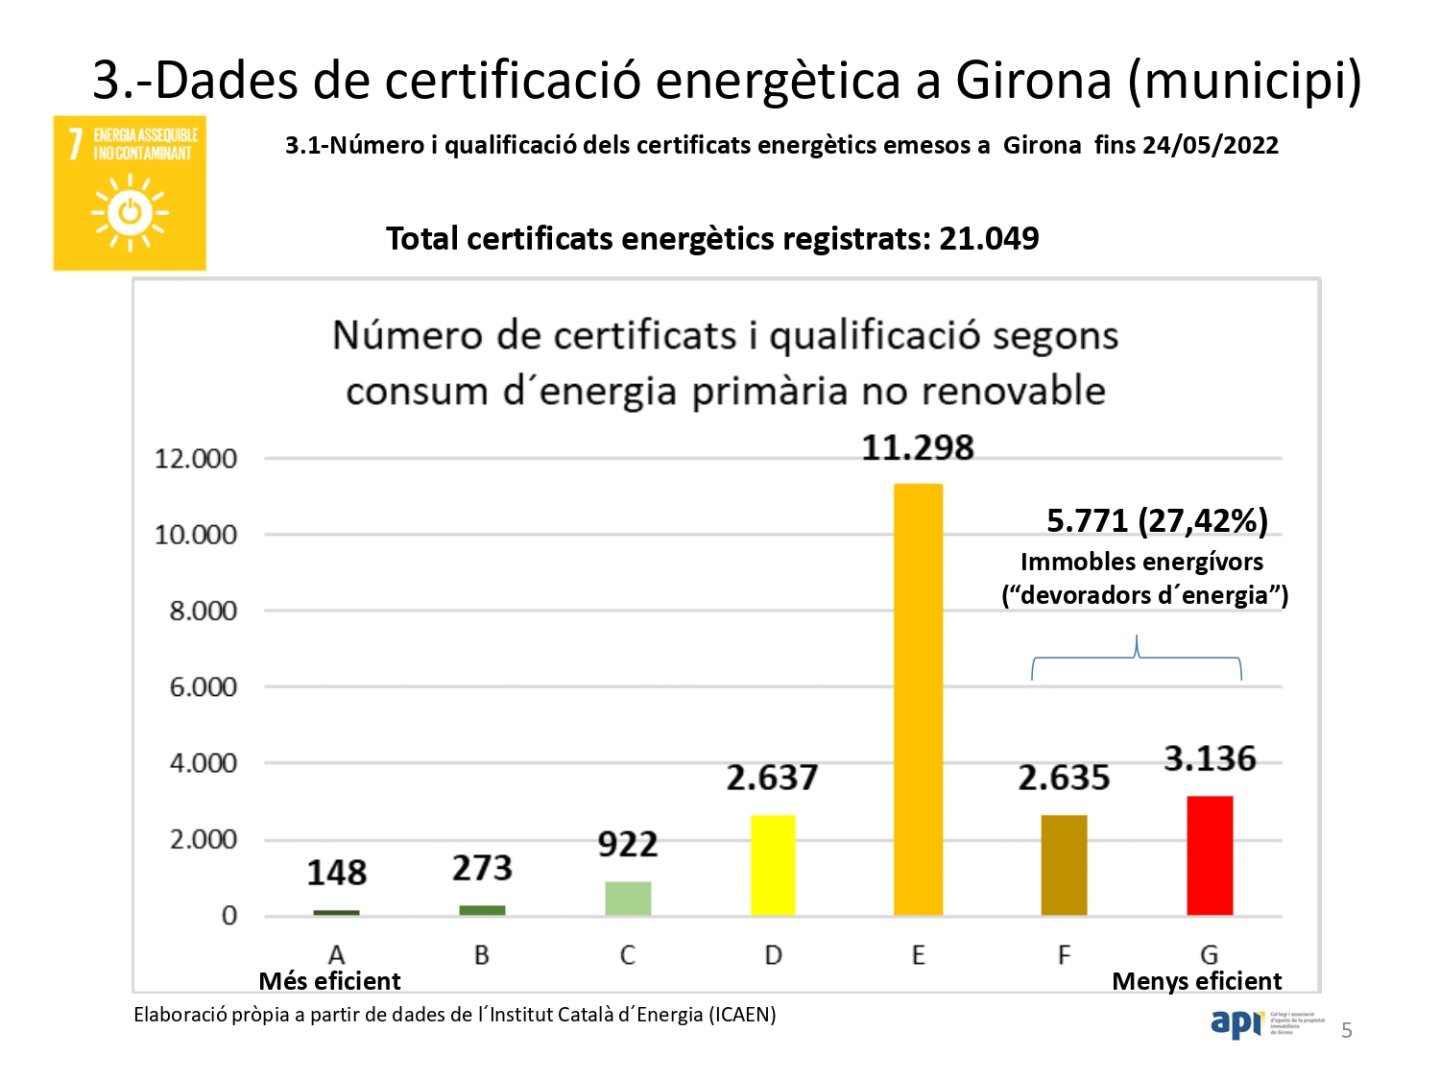 Consum d'energia primària no renovable. Dades a Girona fins 24/5/2022